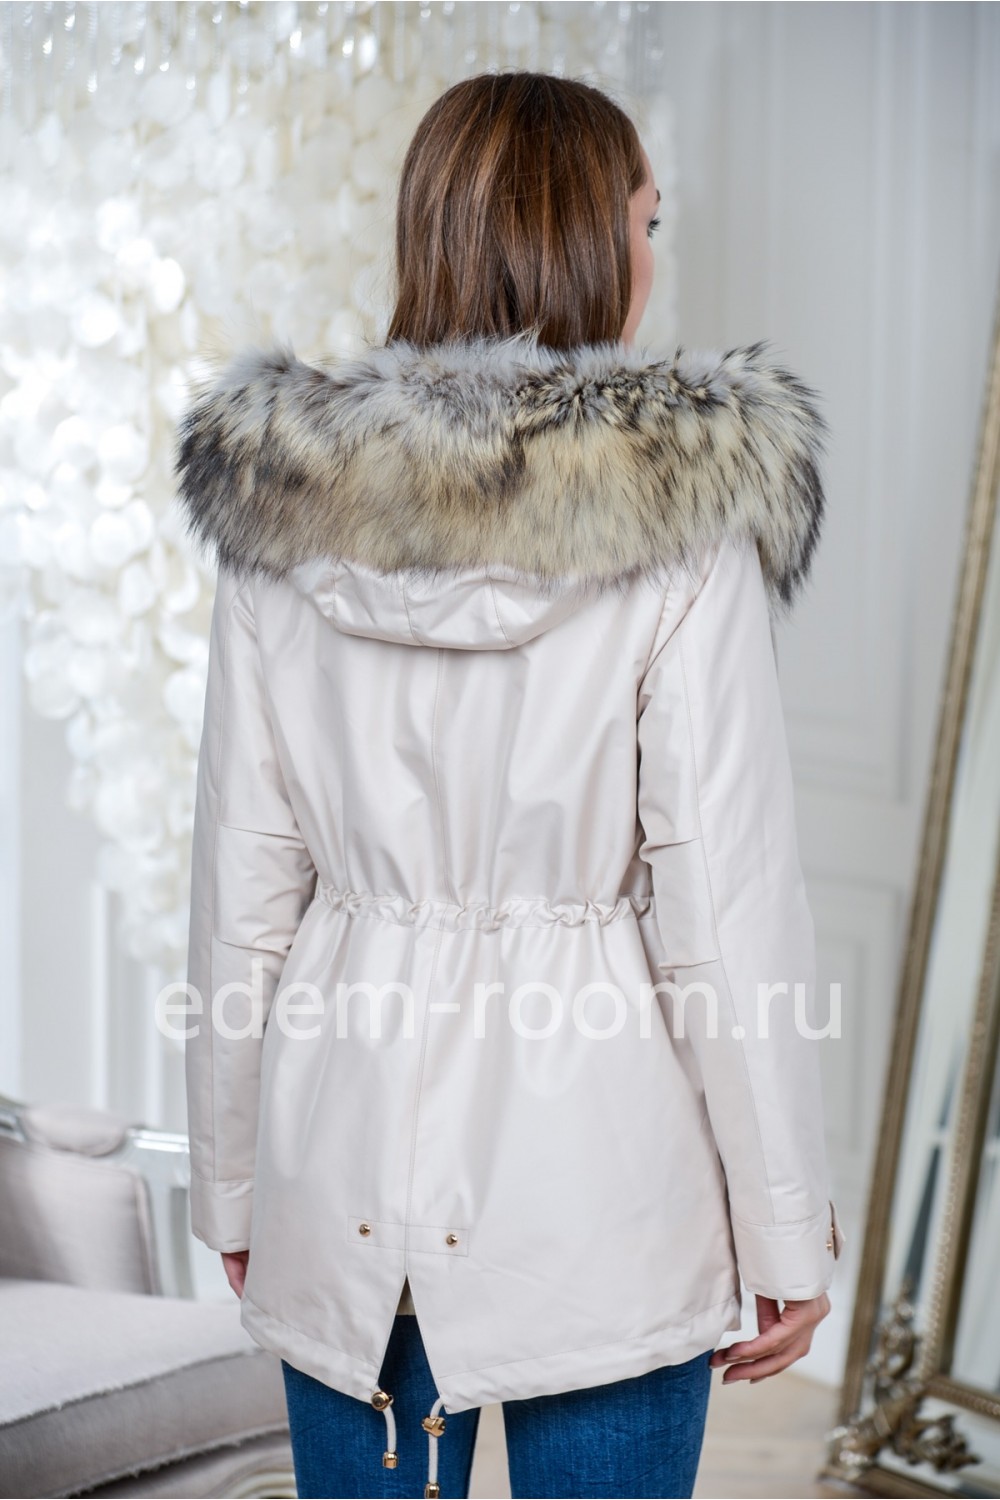 Зимняя парка - куртка с мехом енота